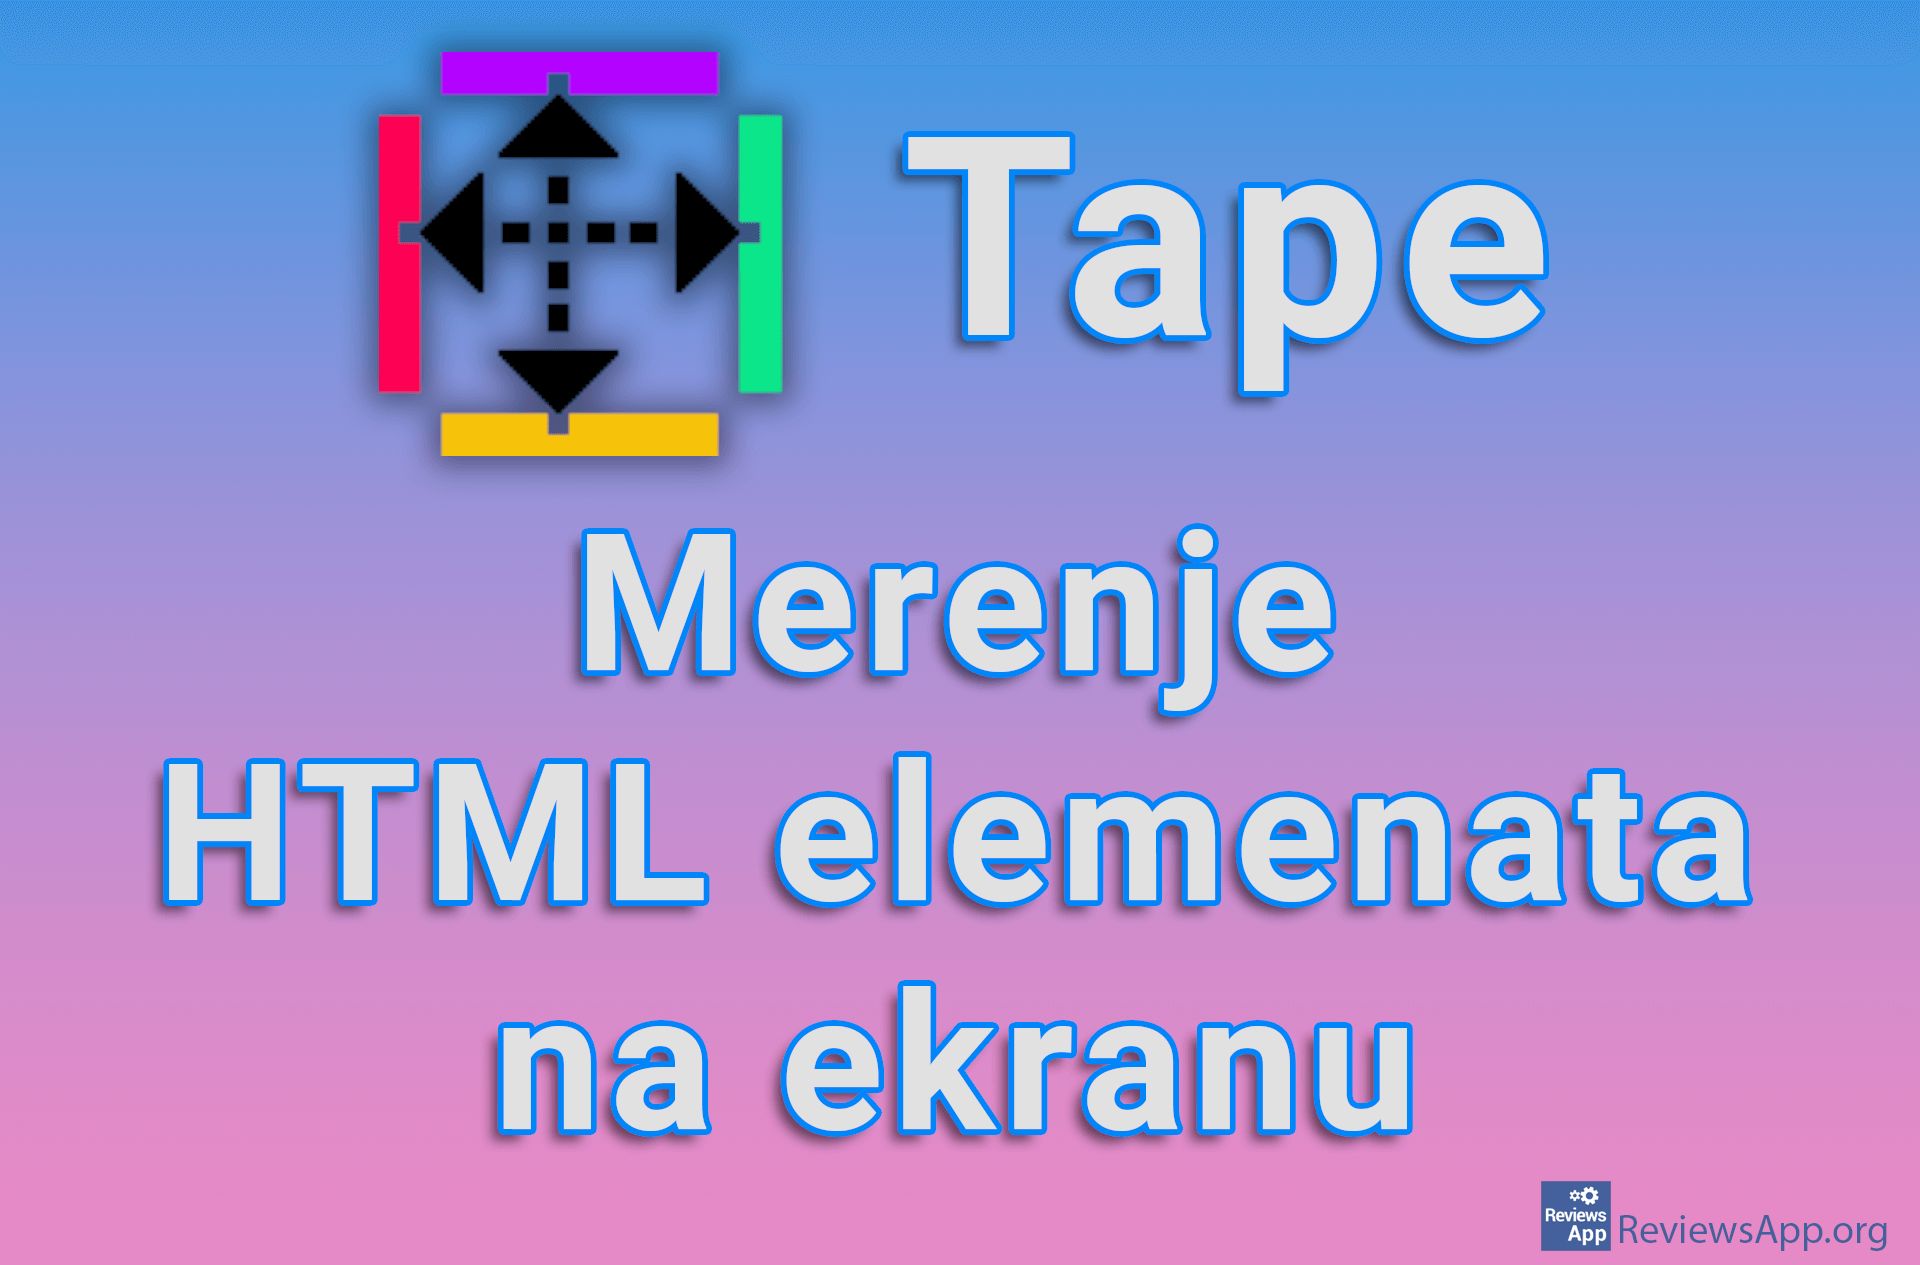 Tape - Merenje HTML elemenata na ekranu